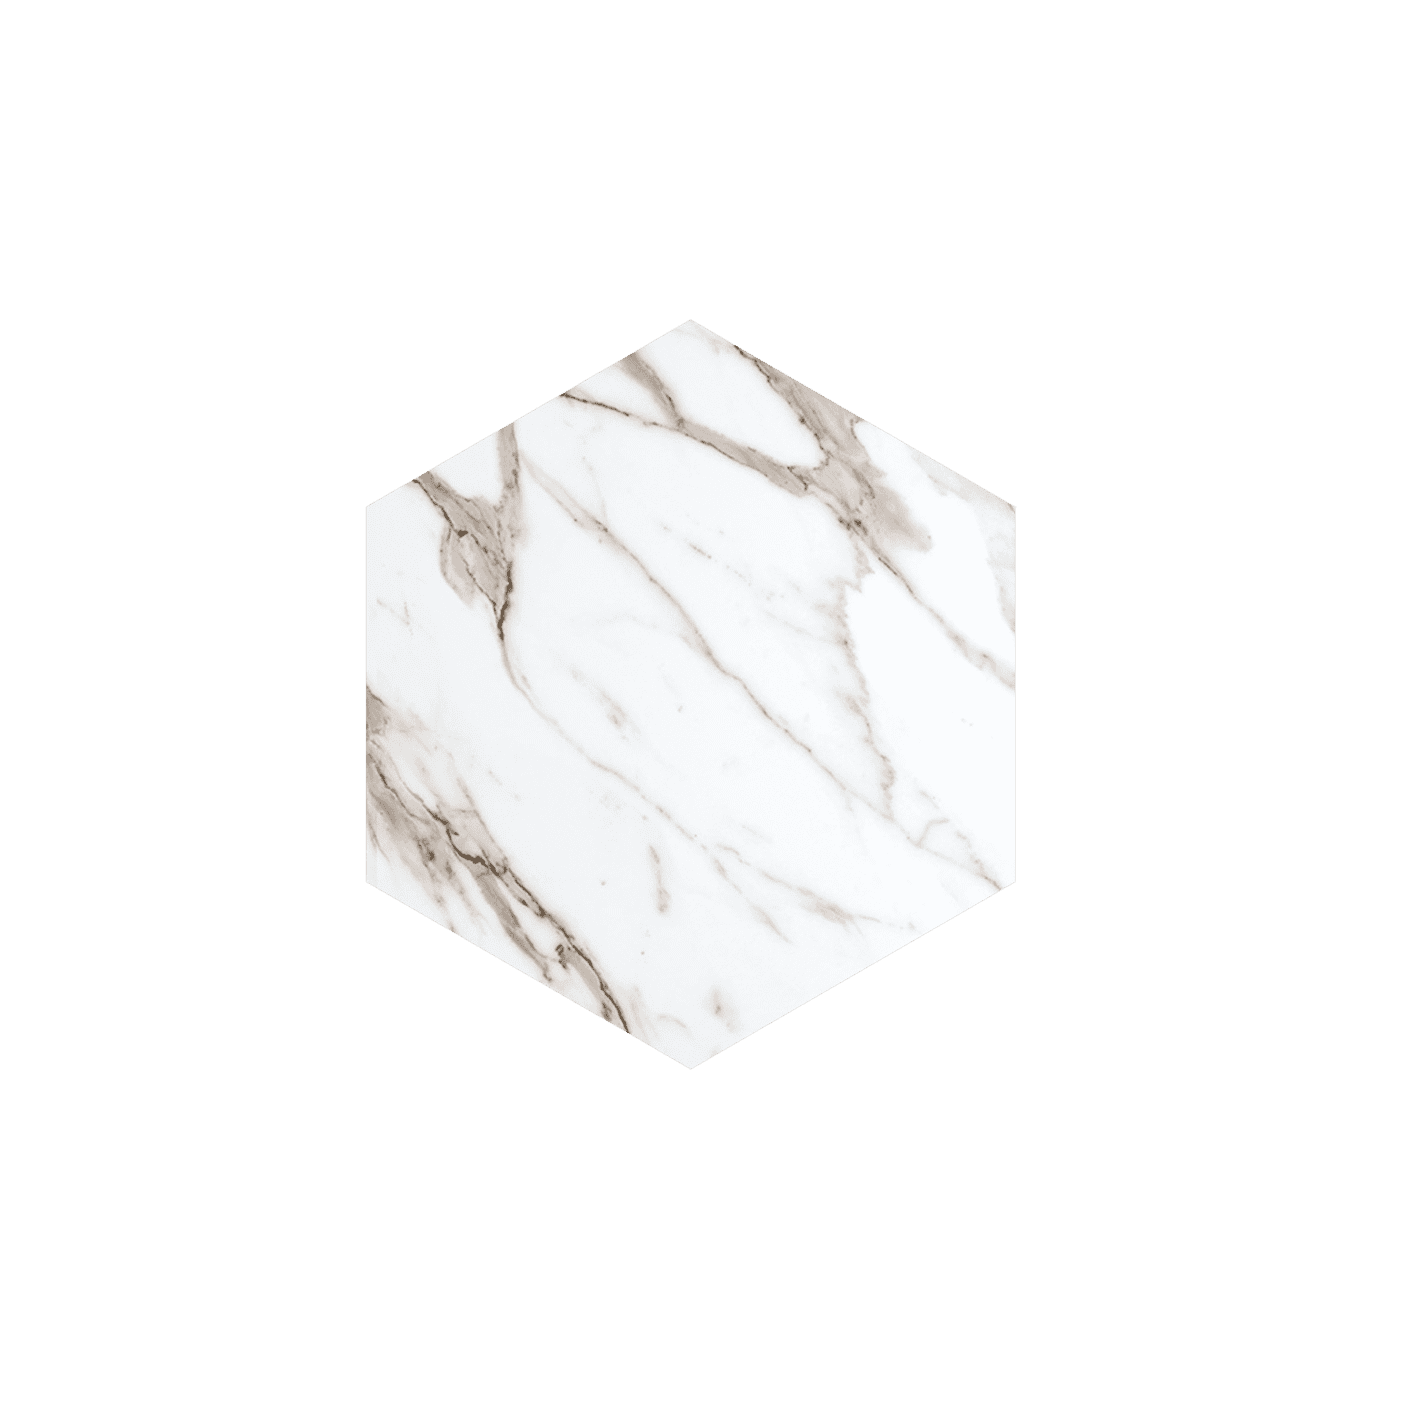 Sienos dekoracija Hexagon, 30x30cm, white marble